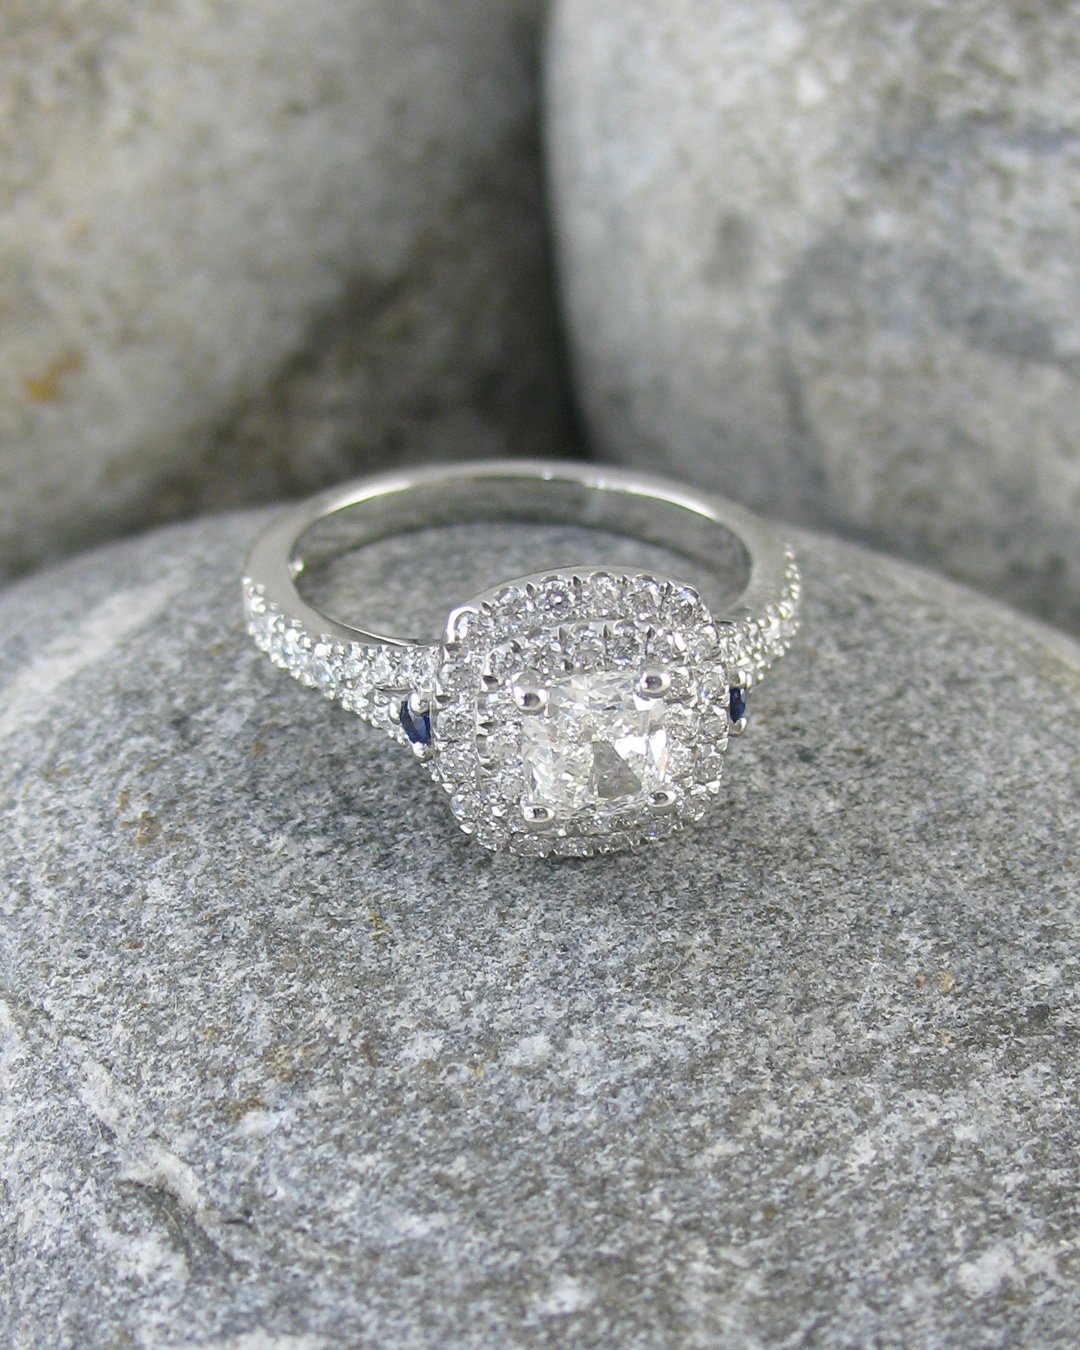 A bespoke diamond halo engagement ring